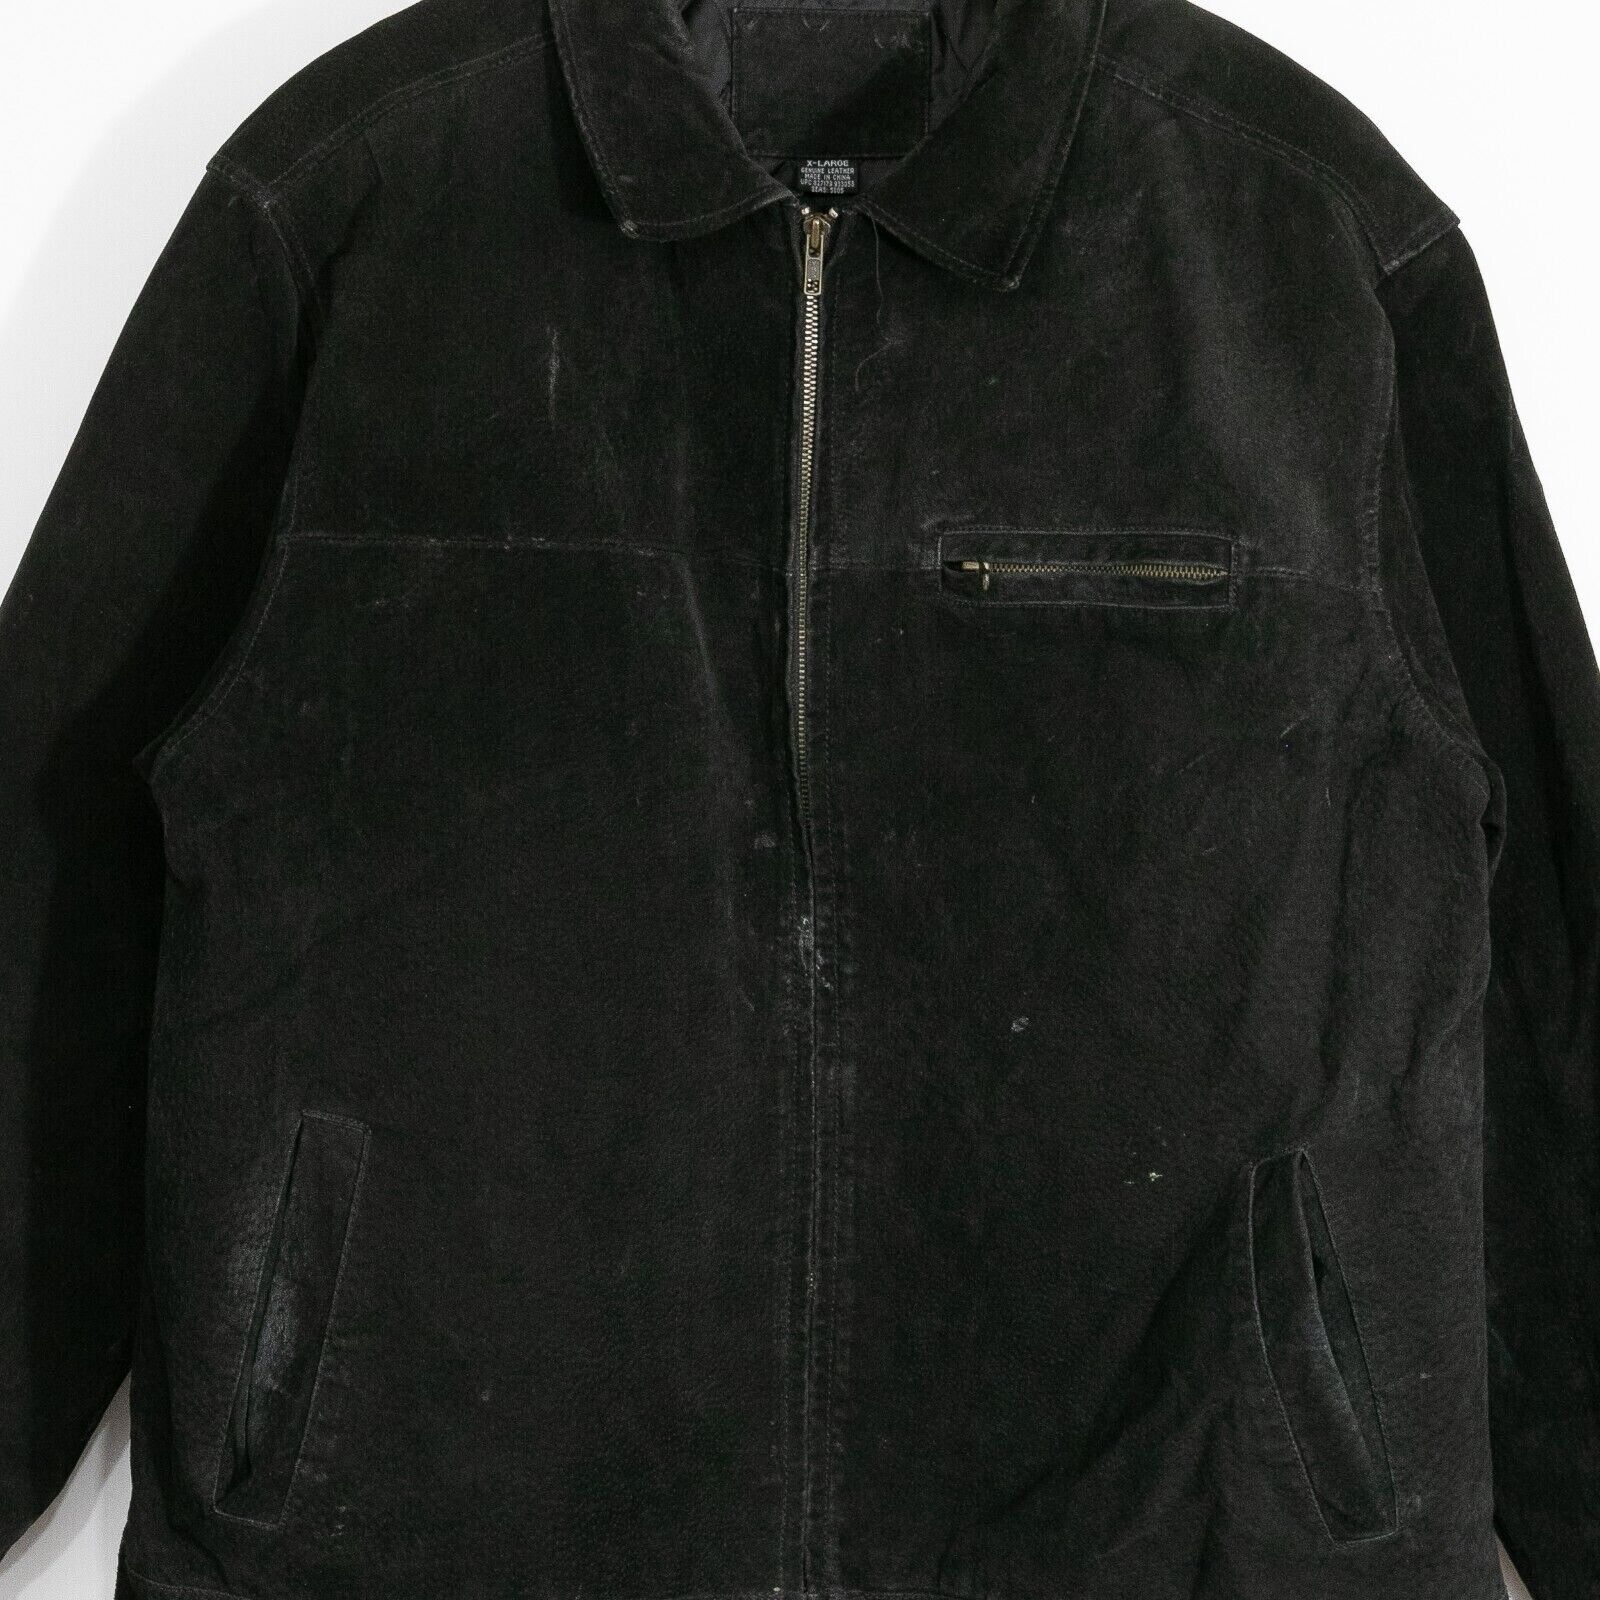 Vintage Vintage Black Suede Zip Up Jacket XL - Patina Distressed Size US XL / EU 56 / 4 - 2 Preview